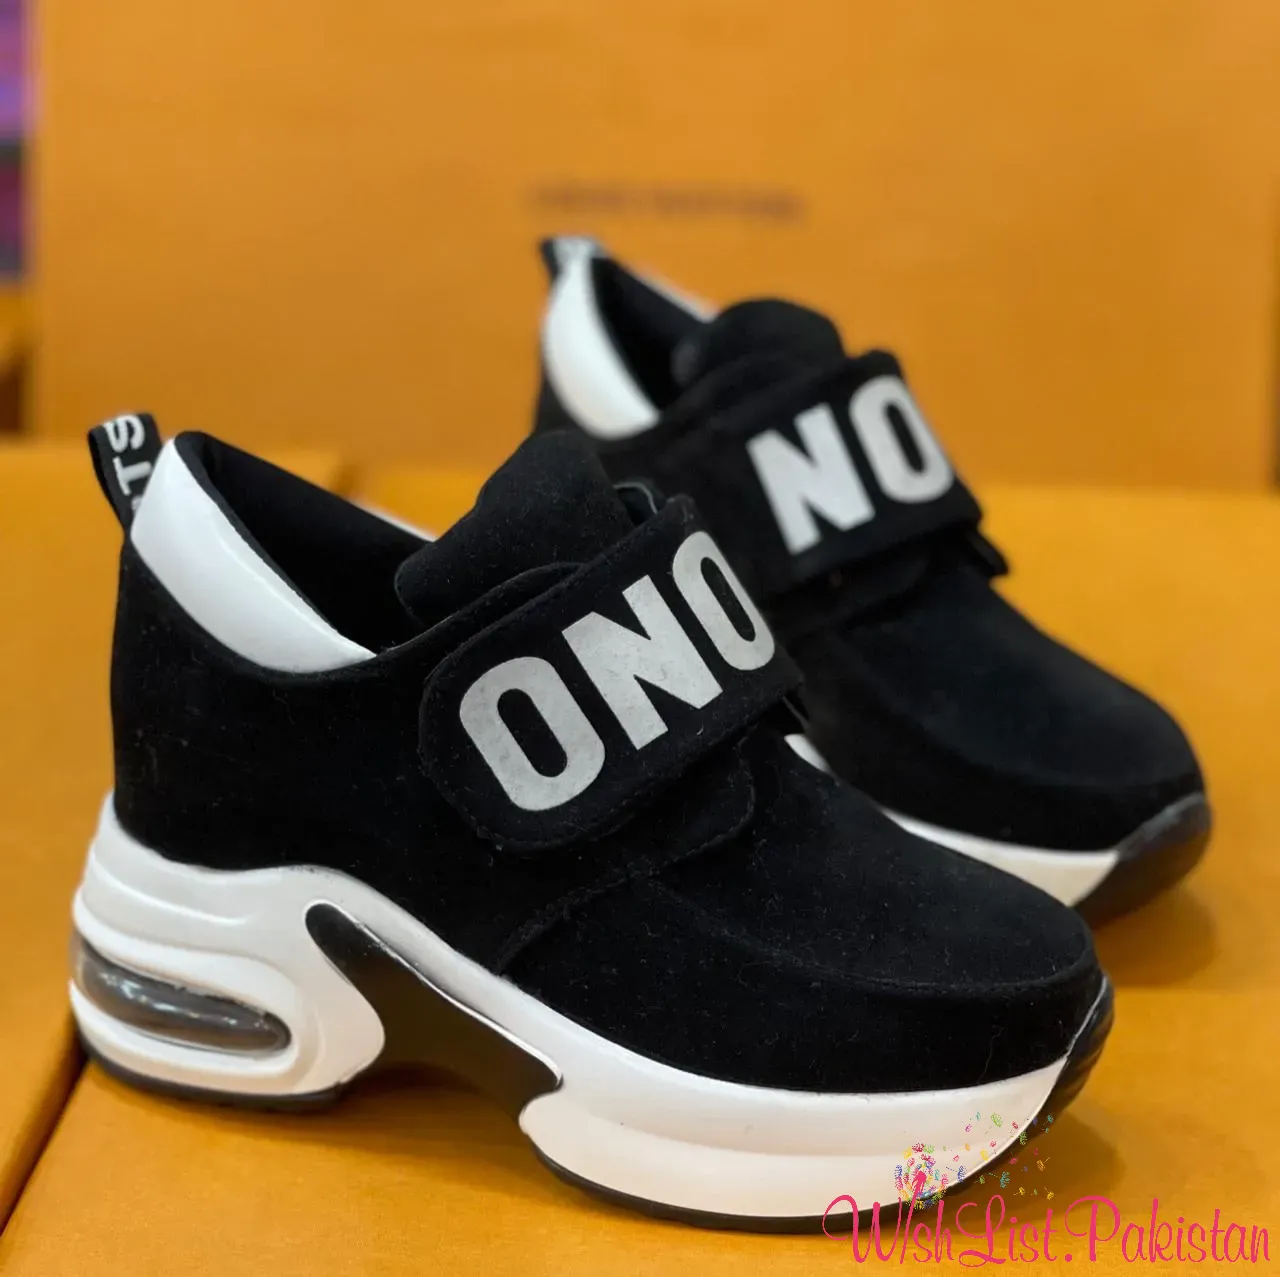 Onon Black Highshoes